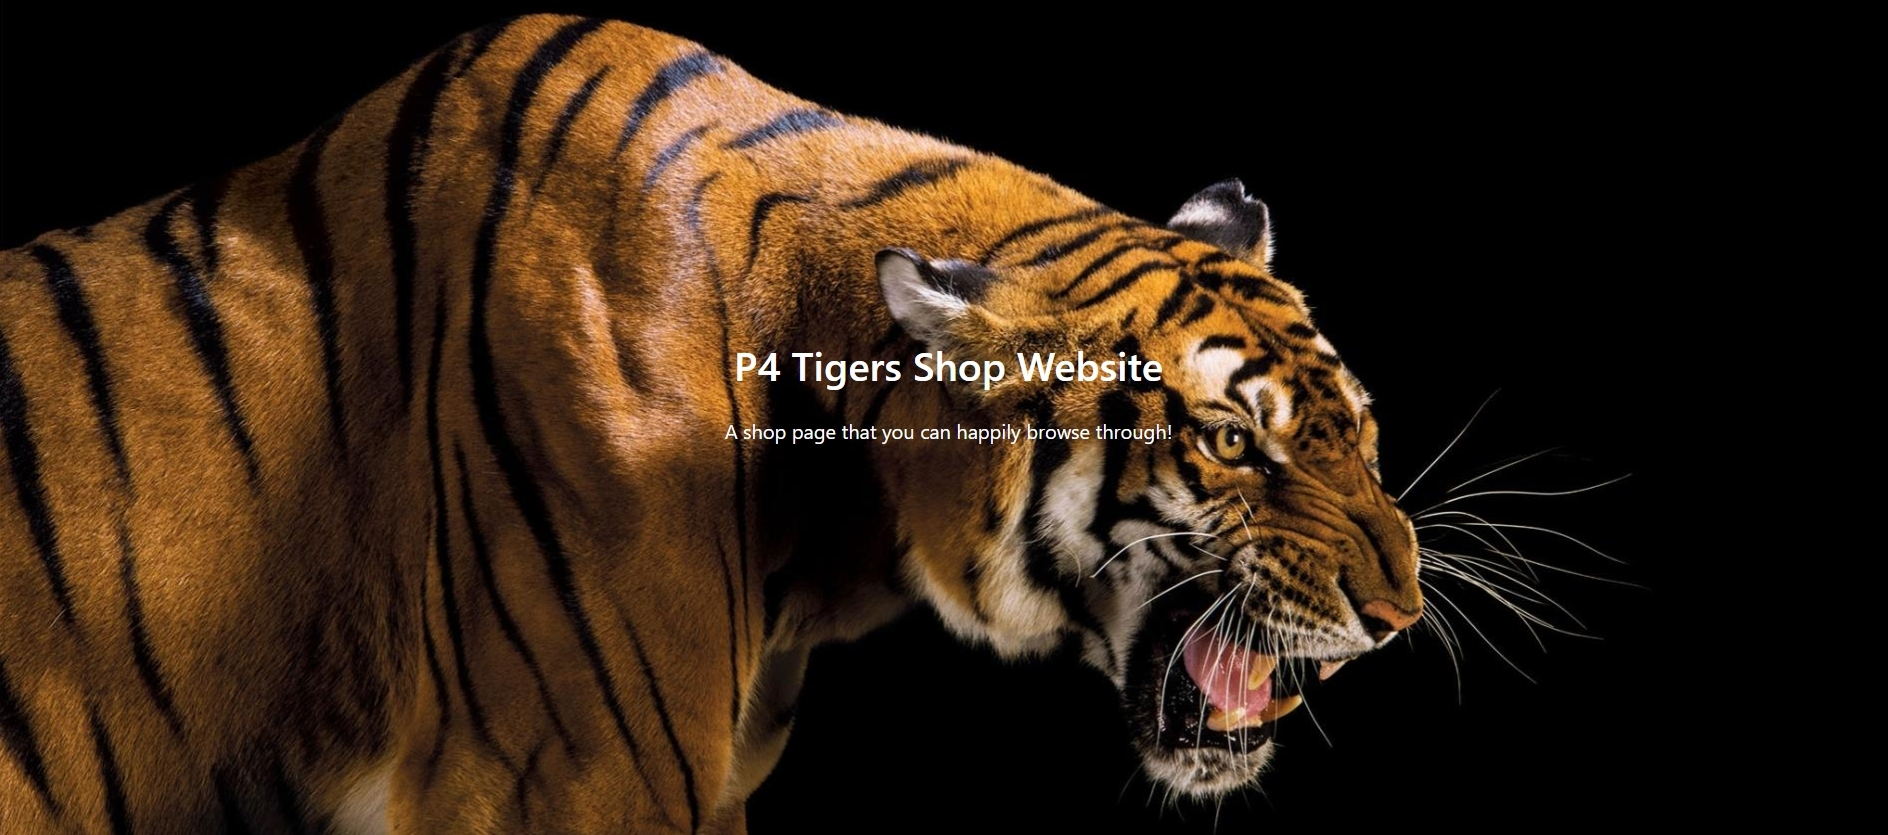 Tigers Shop WebsiteImage